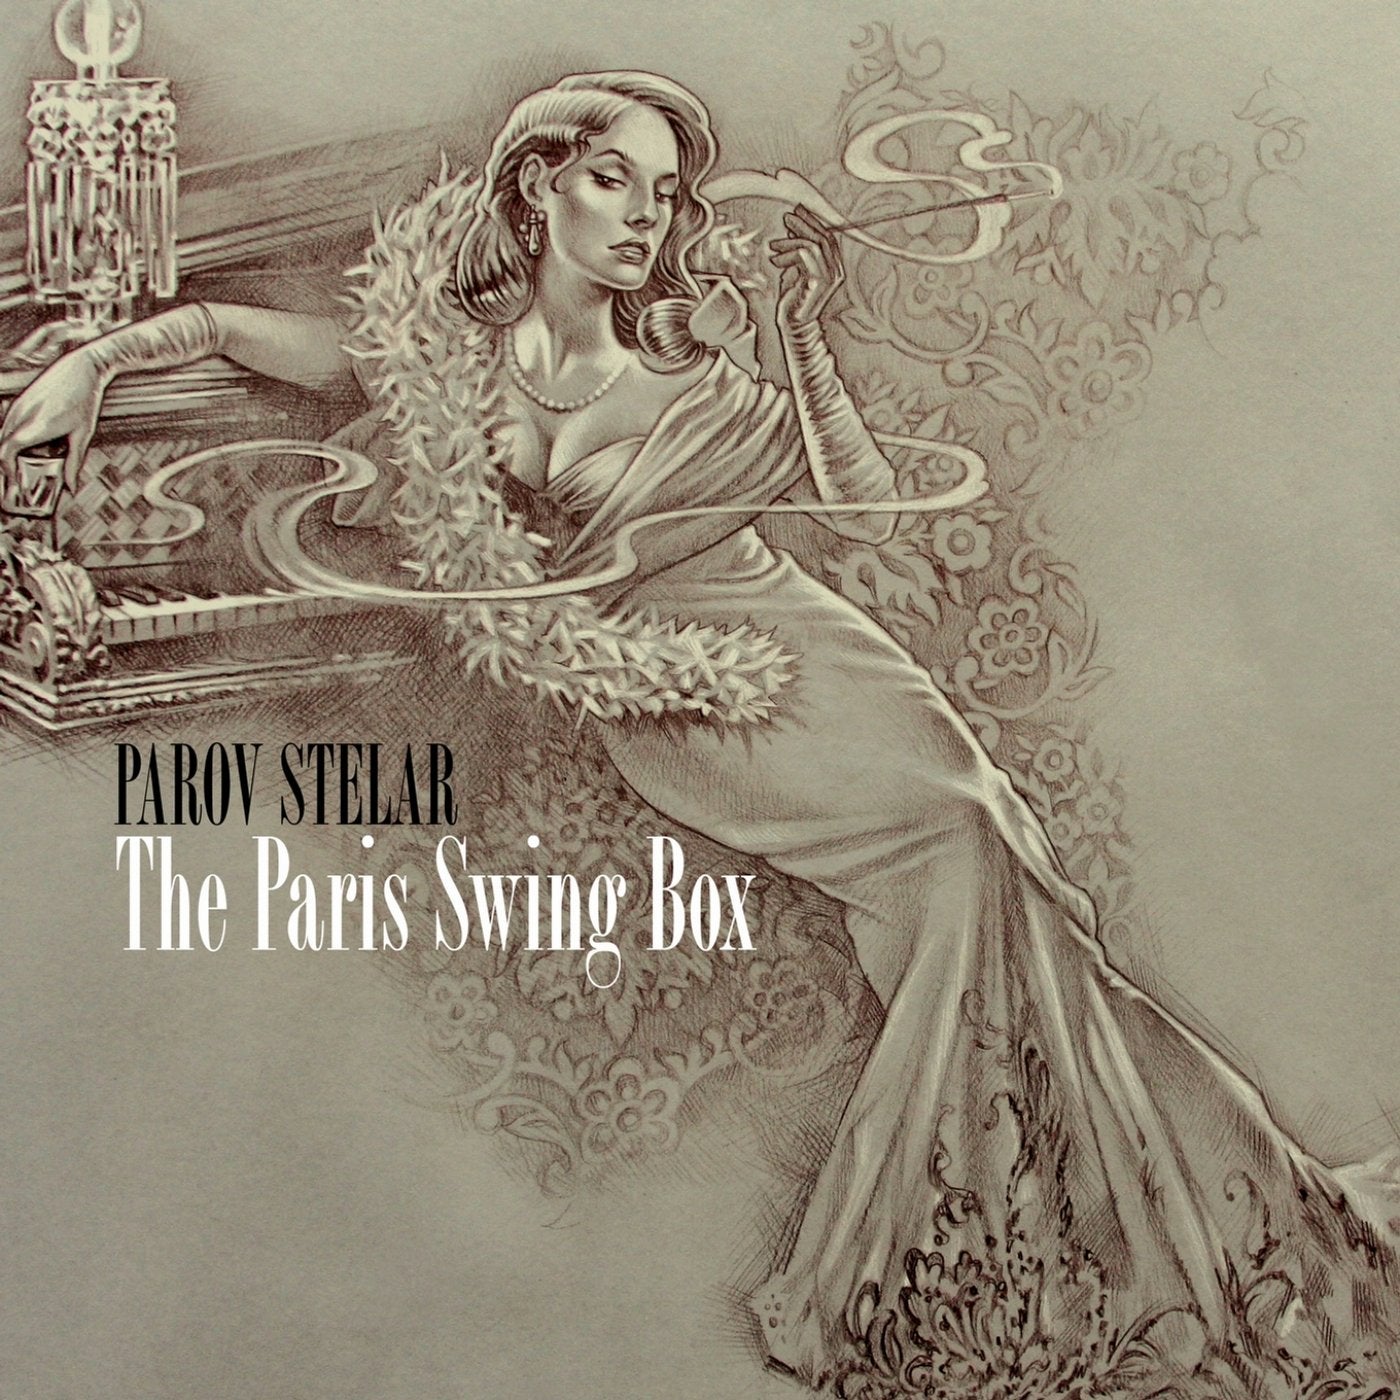 The Paris Swing Box